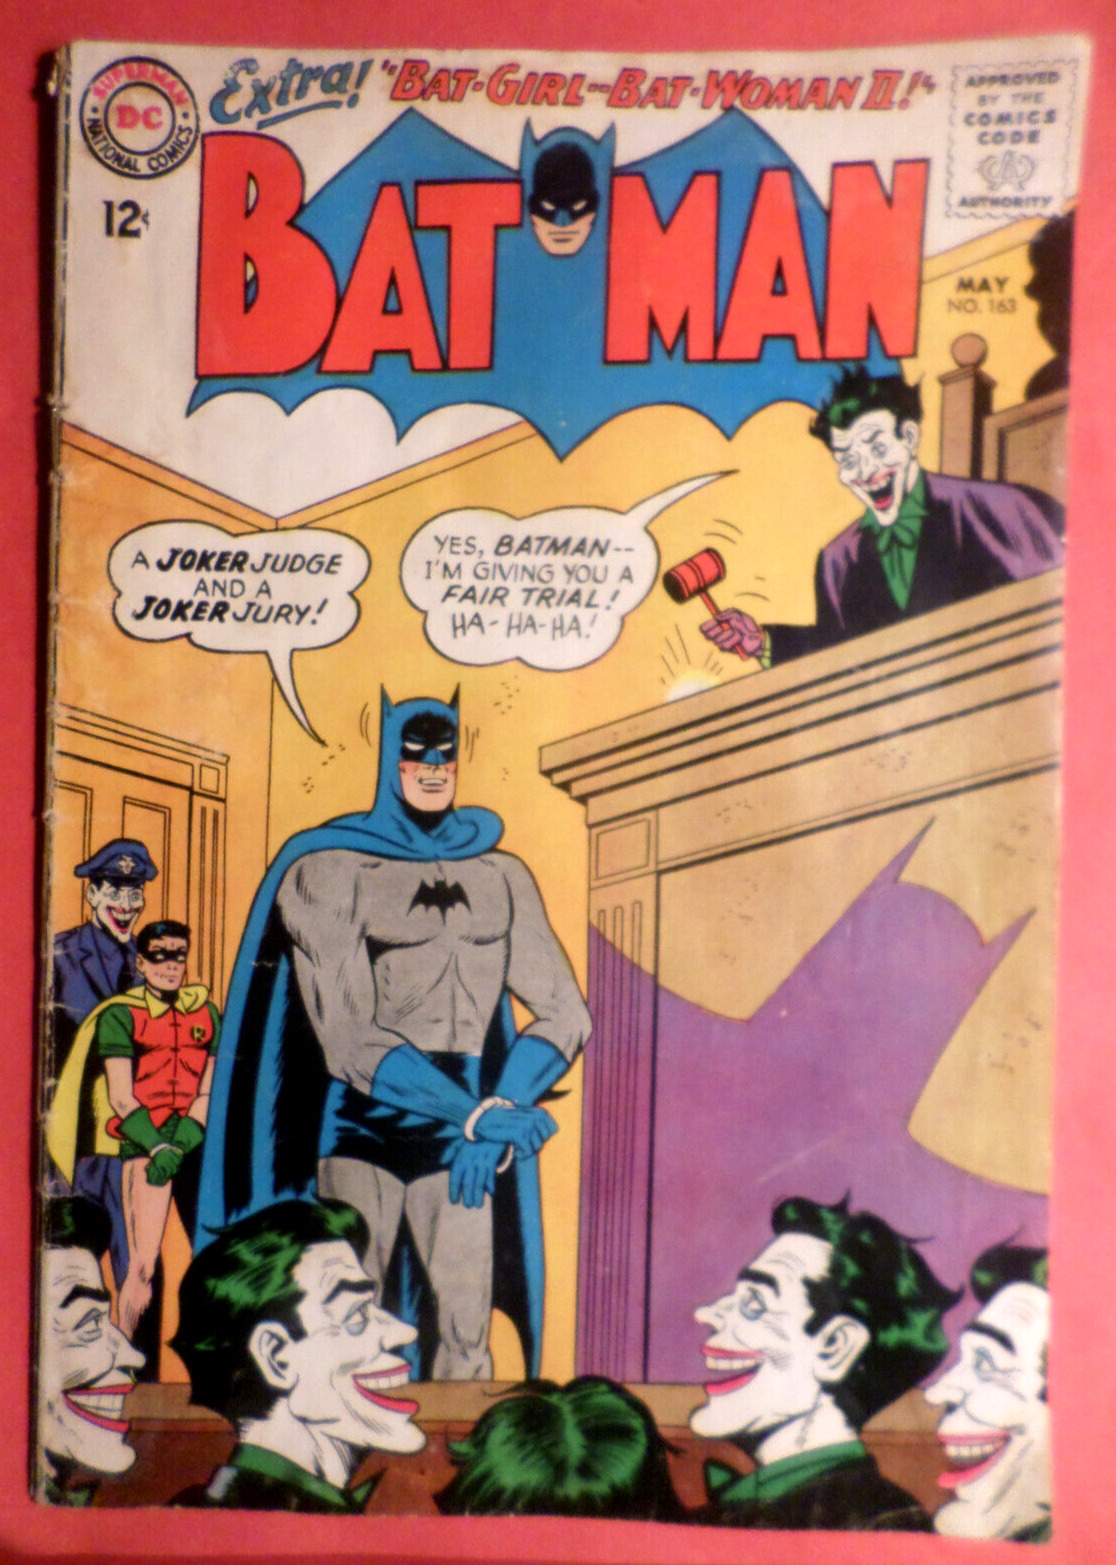 Batman 163 Bat girl- Batwoman II  Joker court Silver Age 1964